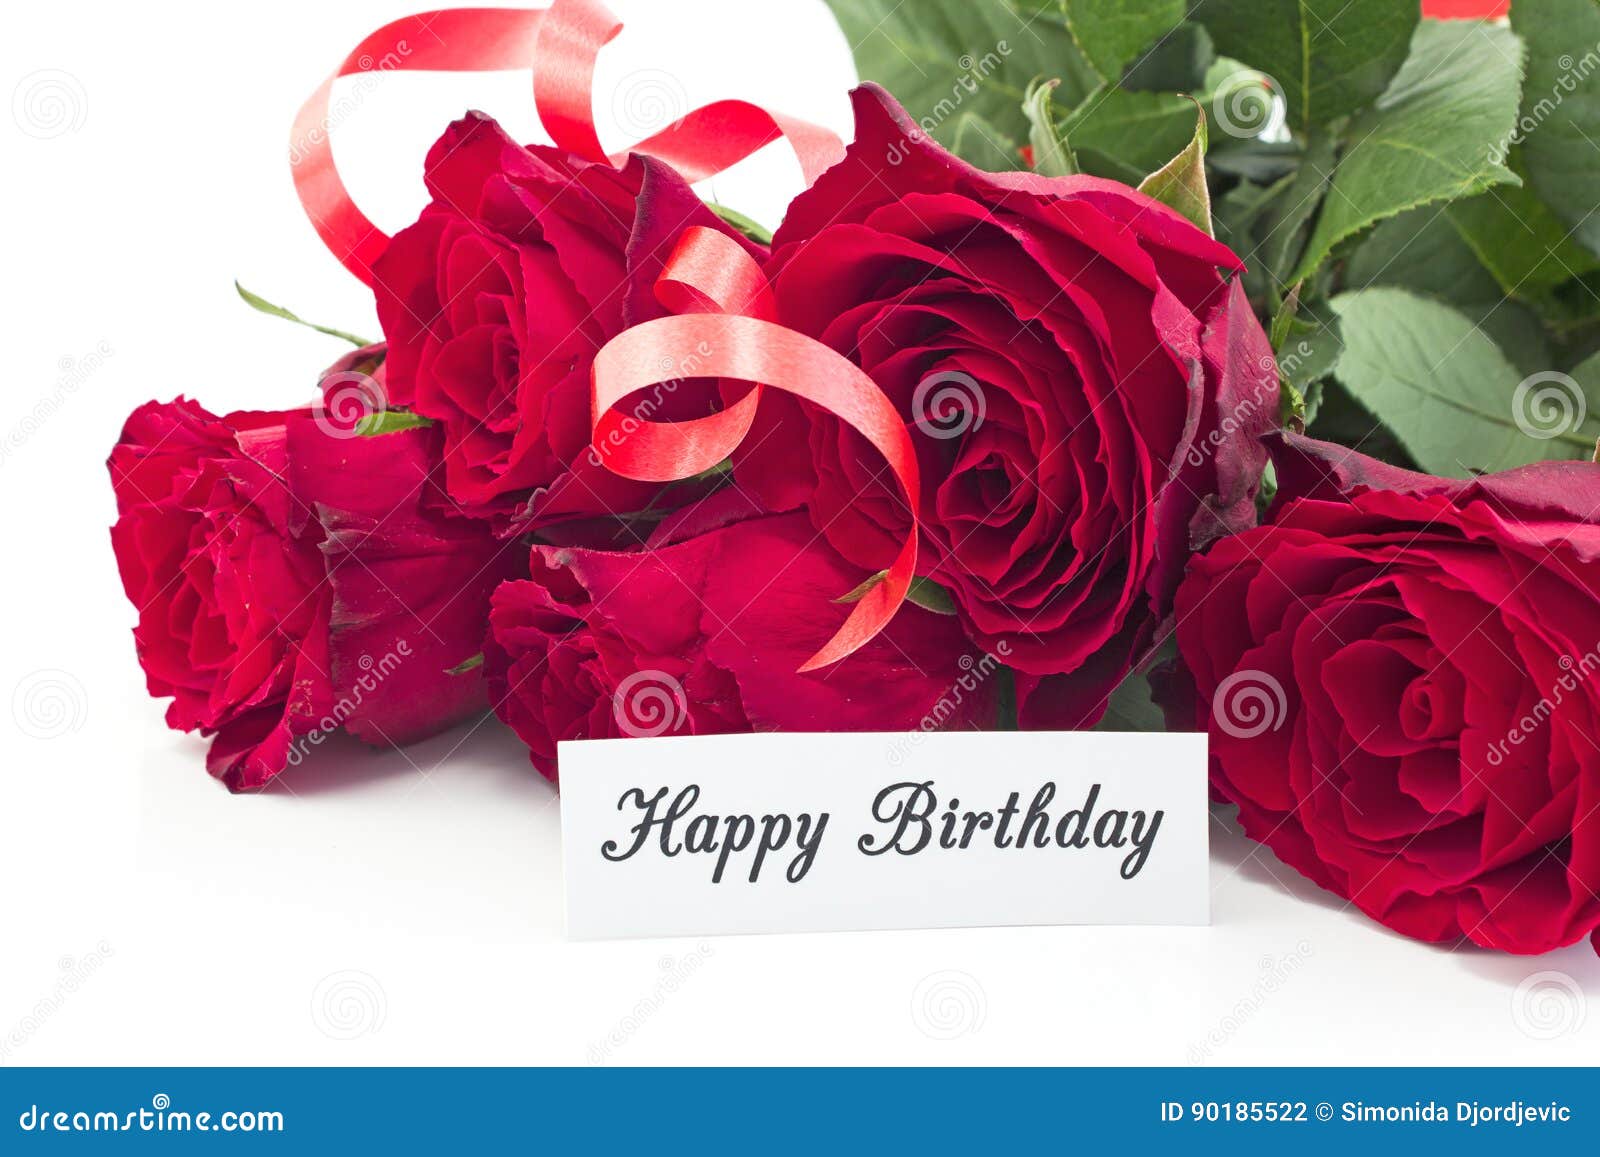 22,514 Happy Birthday Roses Stock Photos - Free & Royalty-Free Stock Photos from Dreamstime